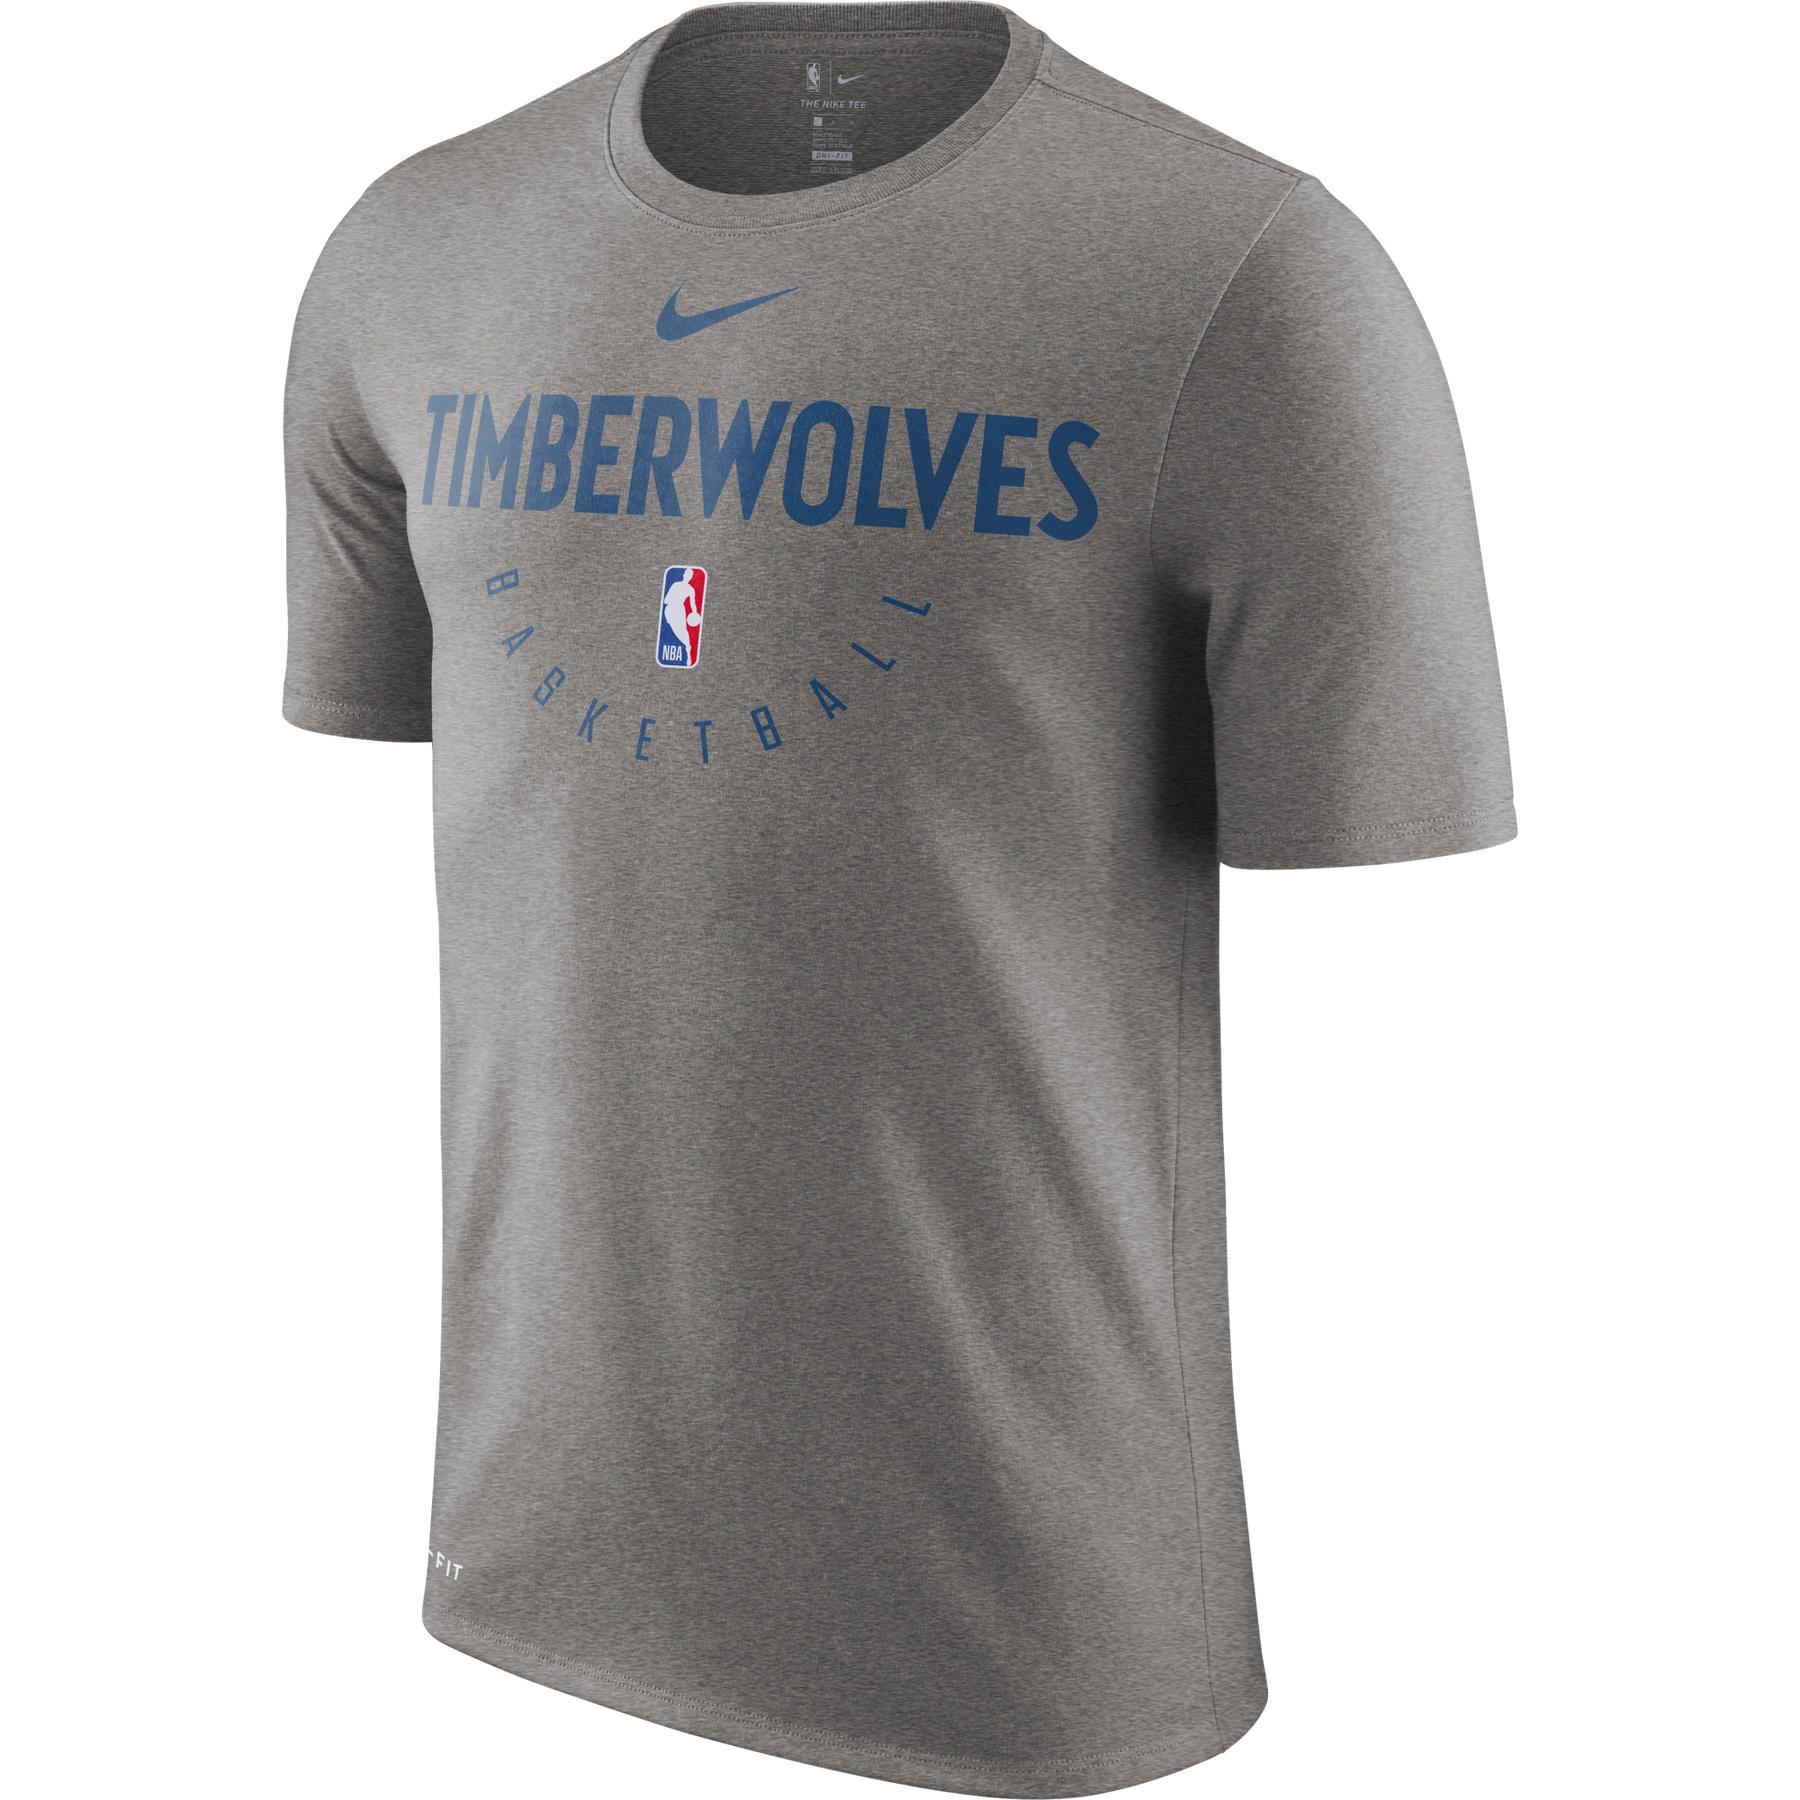 timberwolves jersey gray